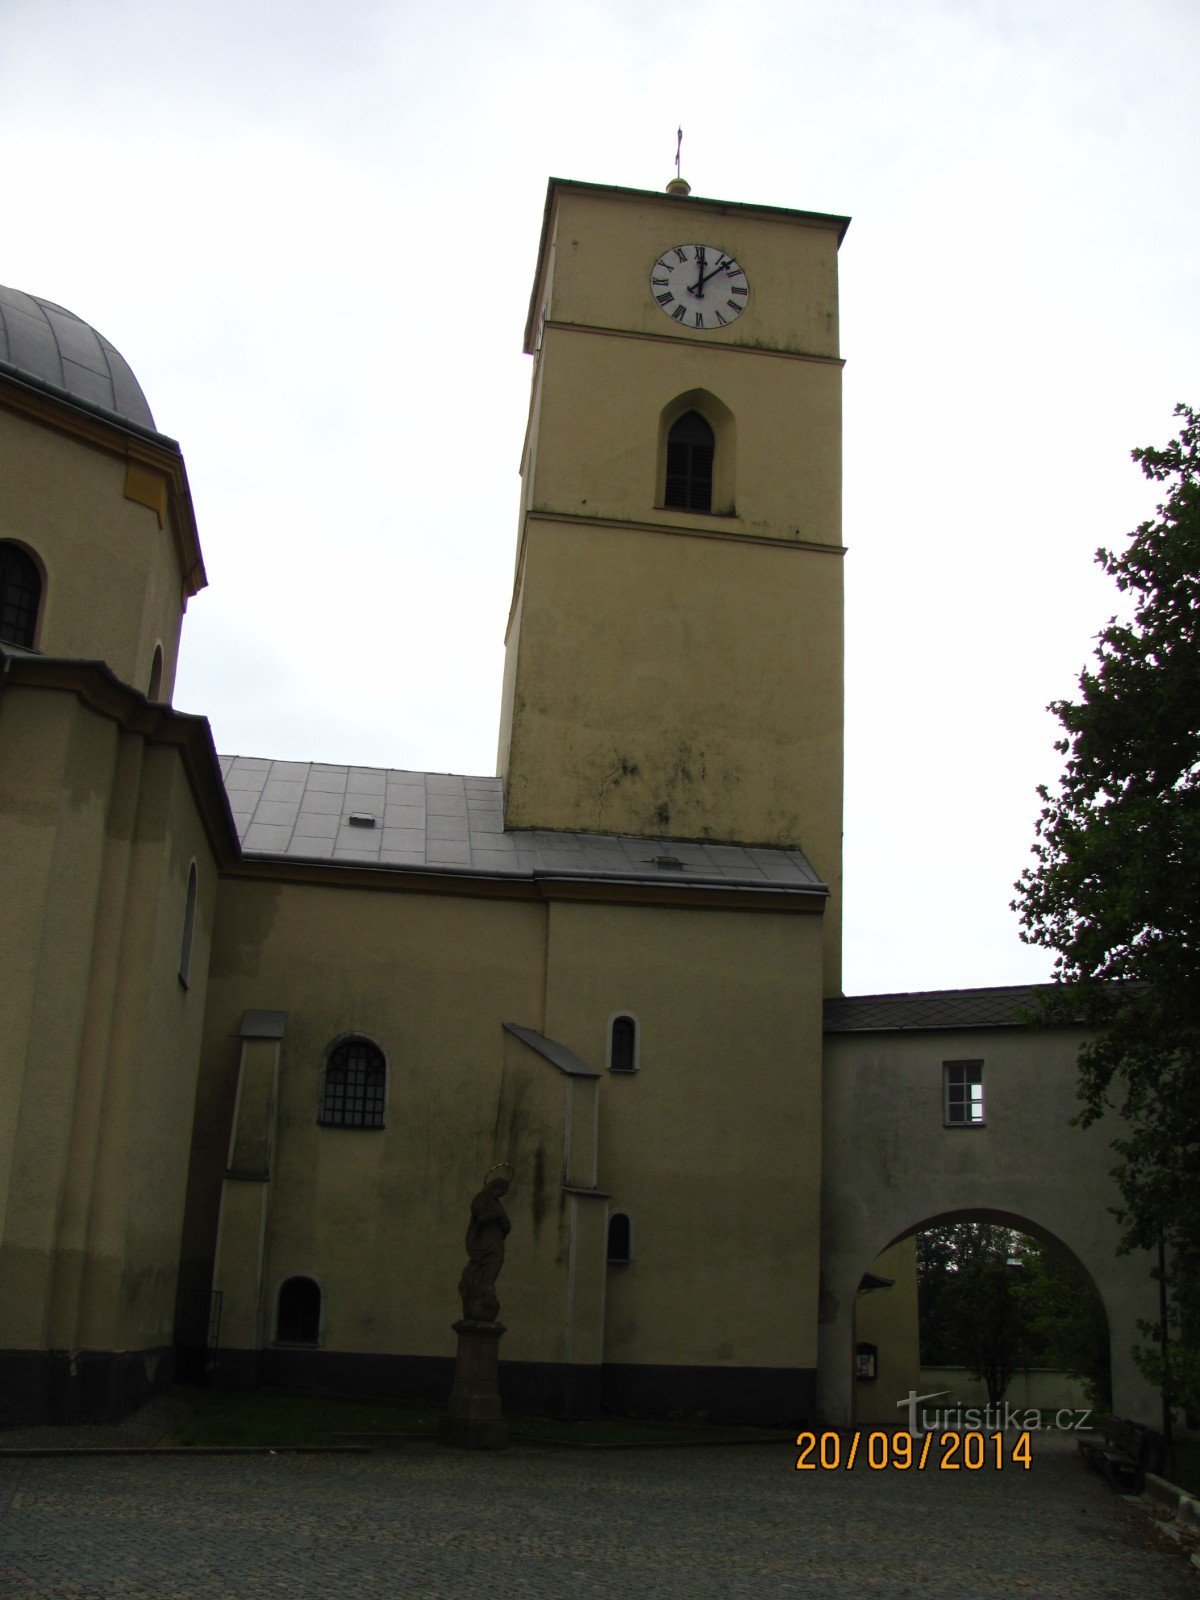 Kirche St. Kateřiny in Klimkovice